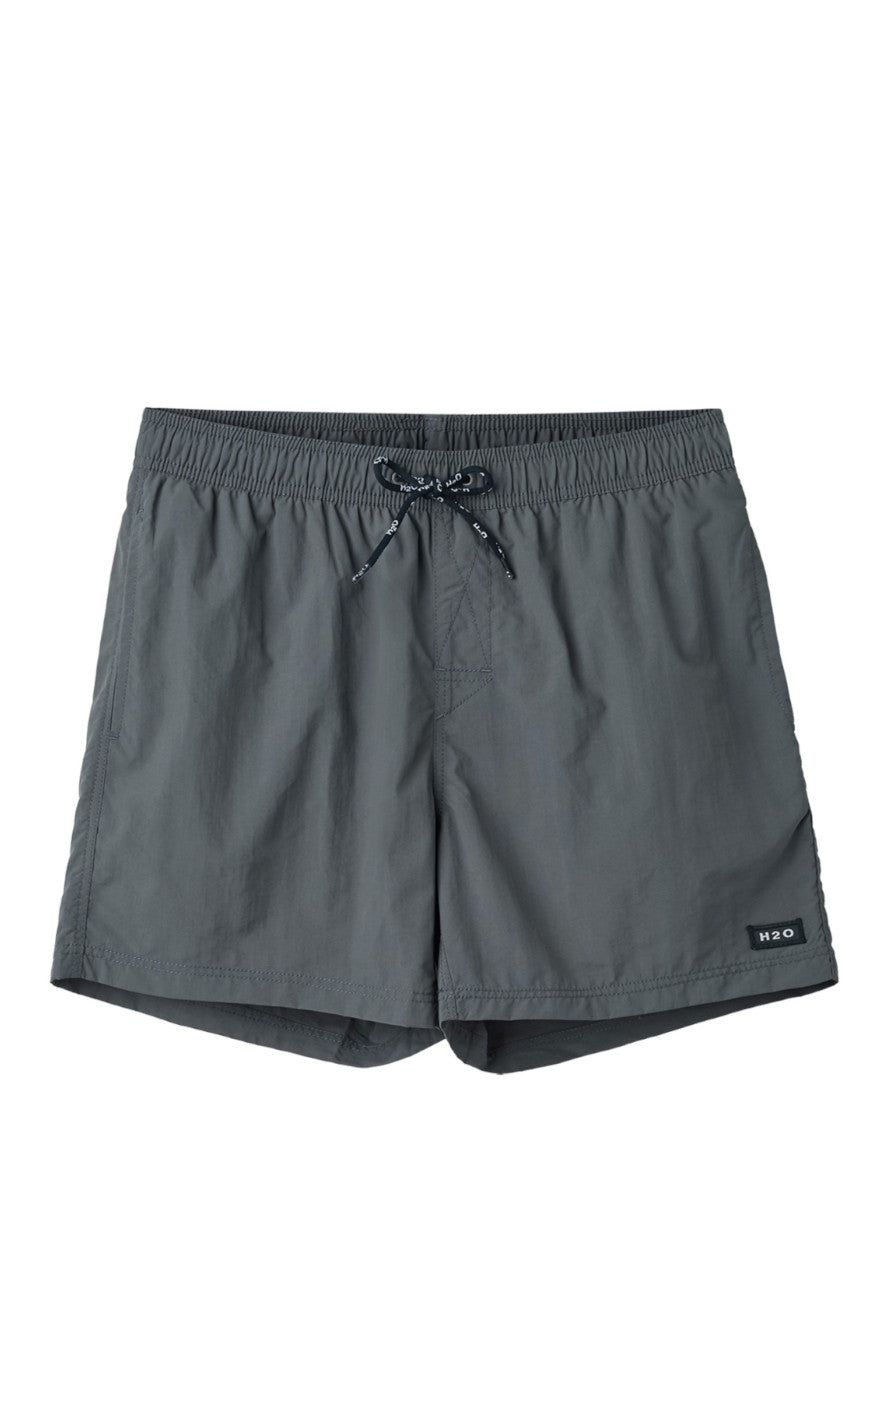 #2 - H2O Shorts - Leisure - Dark Grey